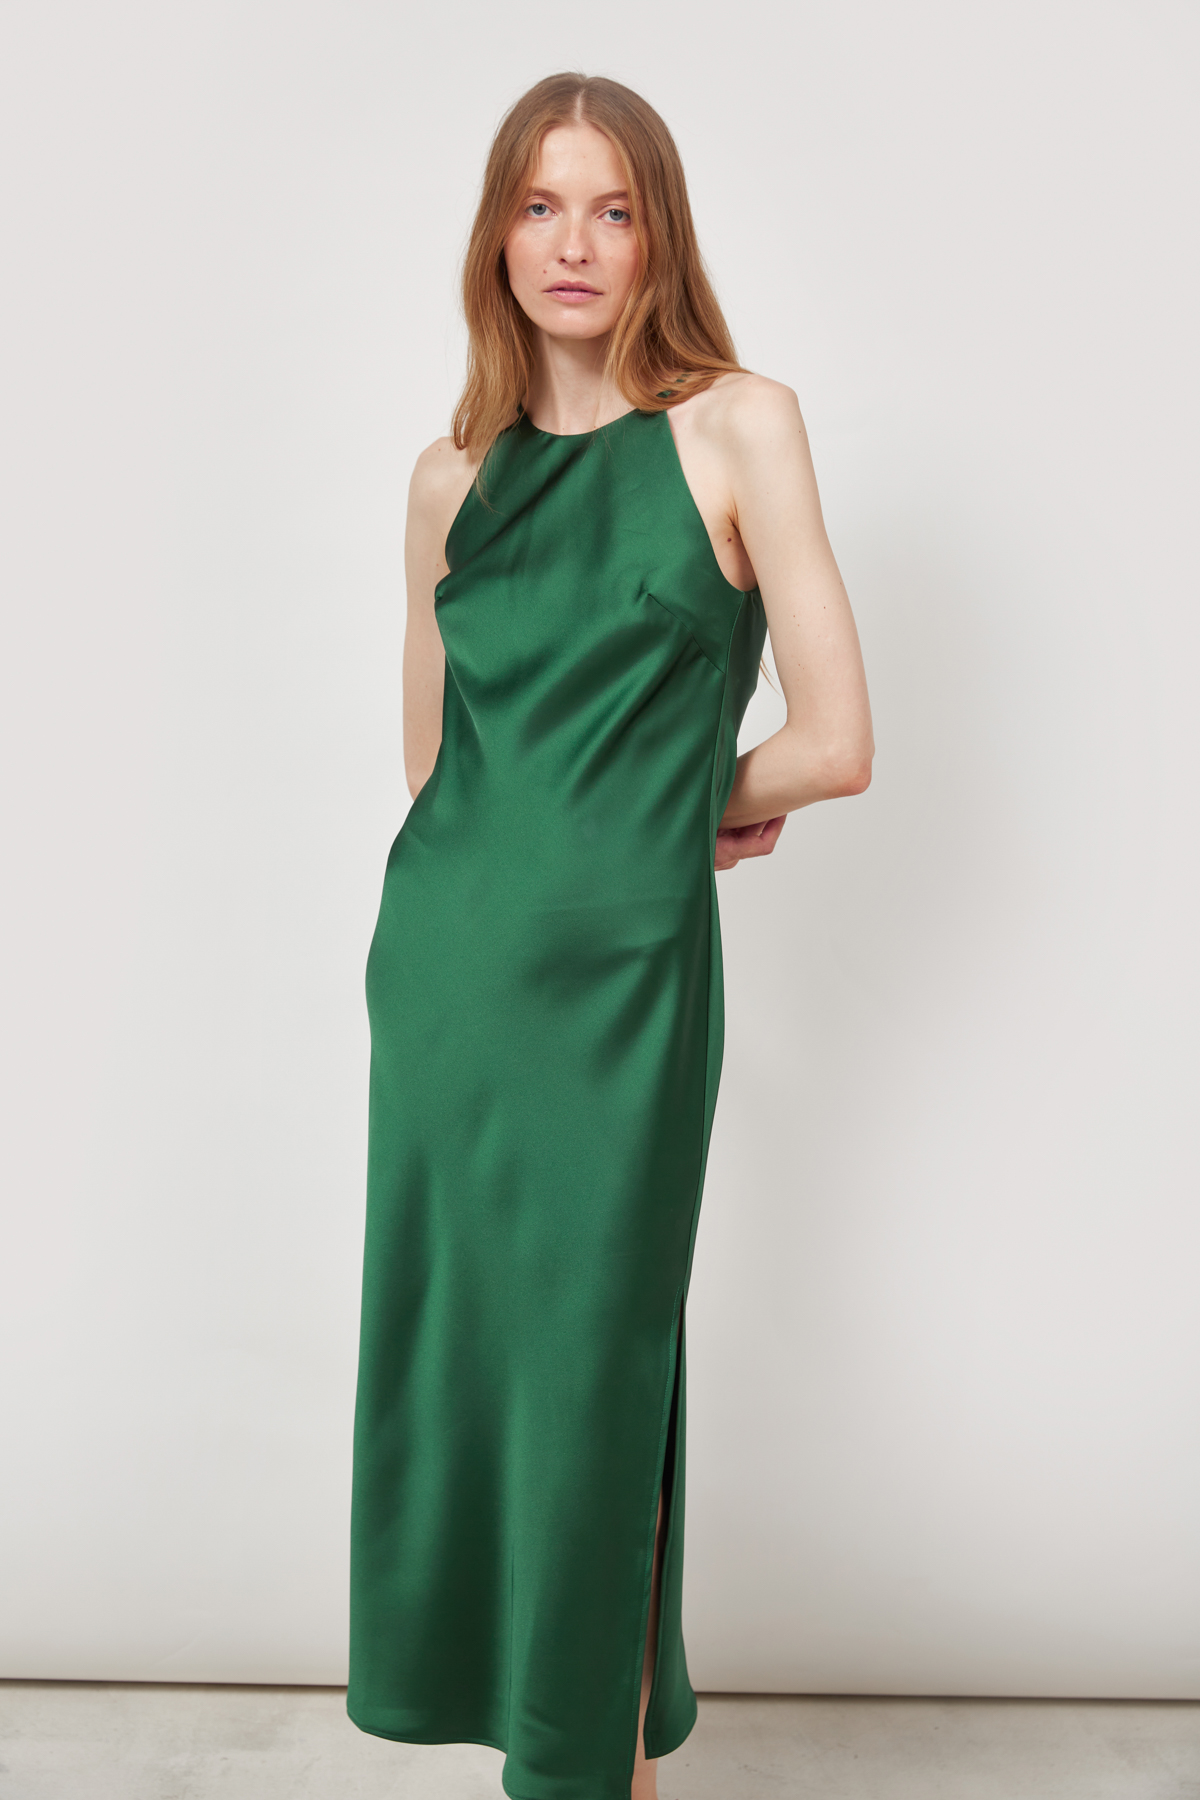 Emerald green satin slip dress, photo 1